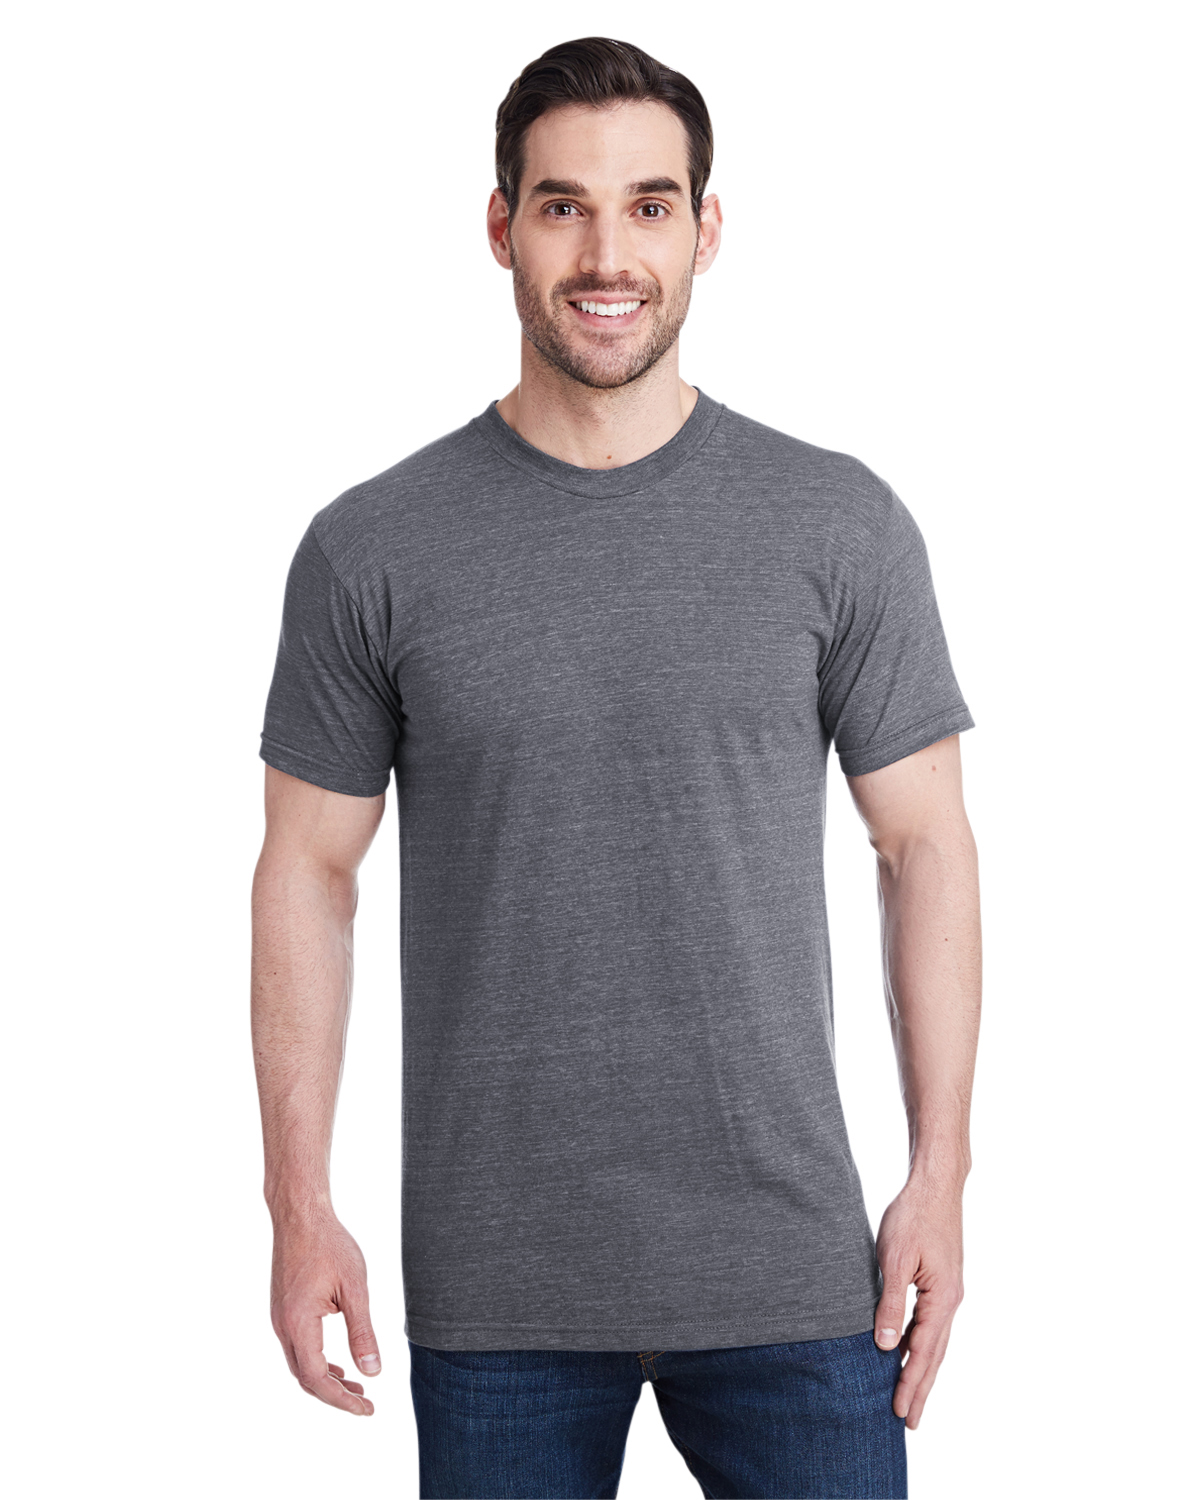 Bayside 5710 - Unisex Triblend T-Shirt $8.98 - T-Shirts